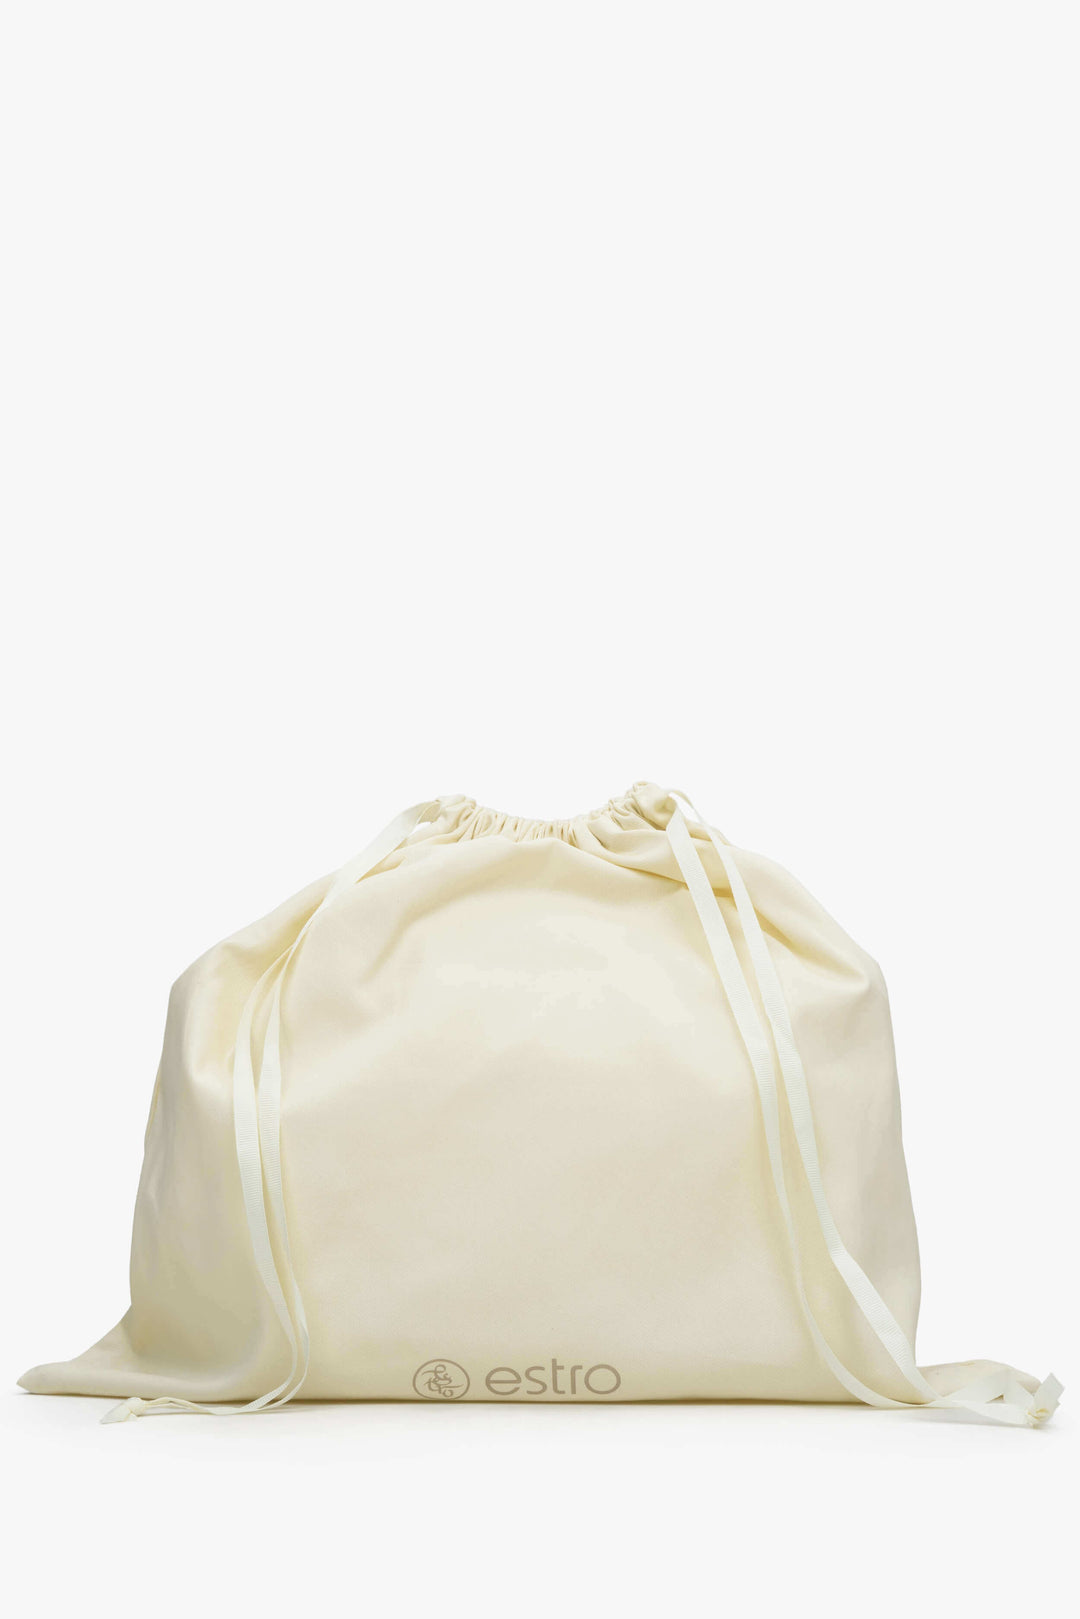 Biała torba damska na ramię z kieszeniami ze skóry naturalnej Estro ER00114407